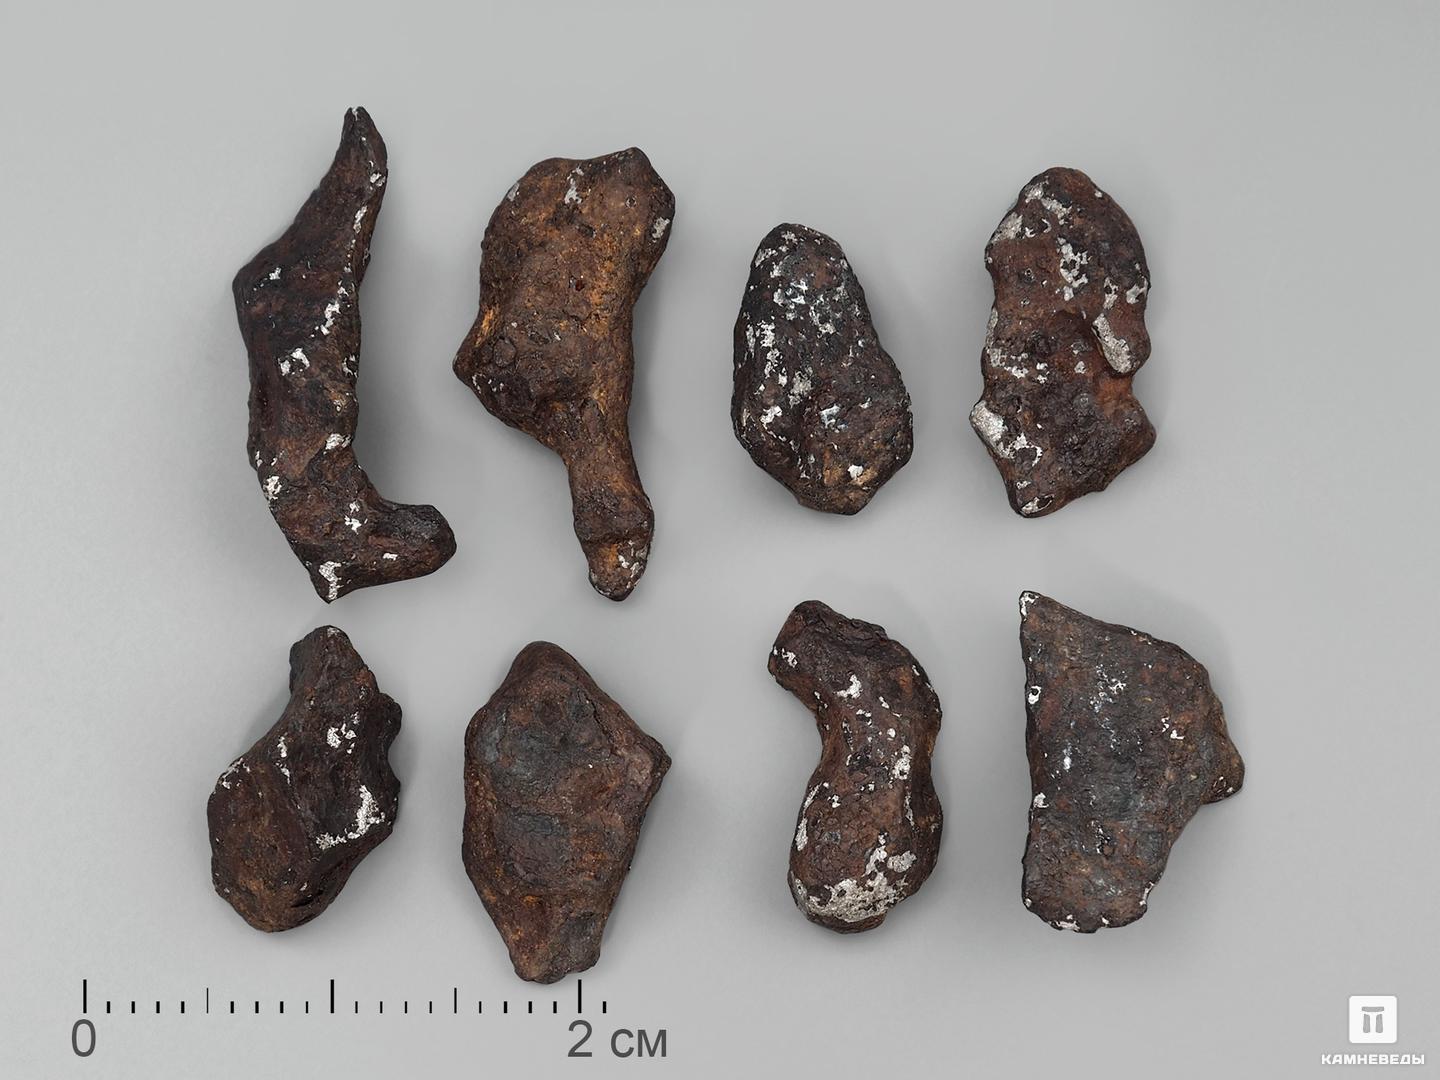 Метеорит Agoudal железный, 0,5-2 см (1-2 г) метеорит agoudal железный 0 5 2 см 1 2 г